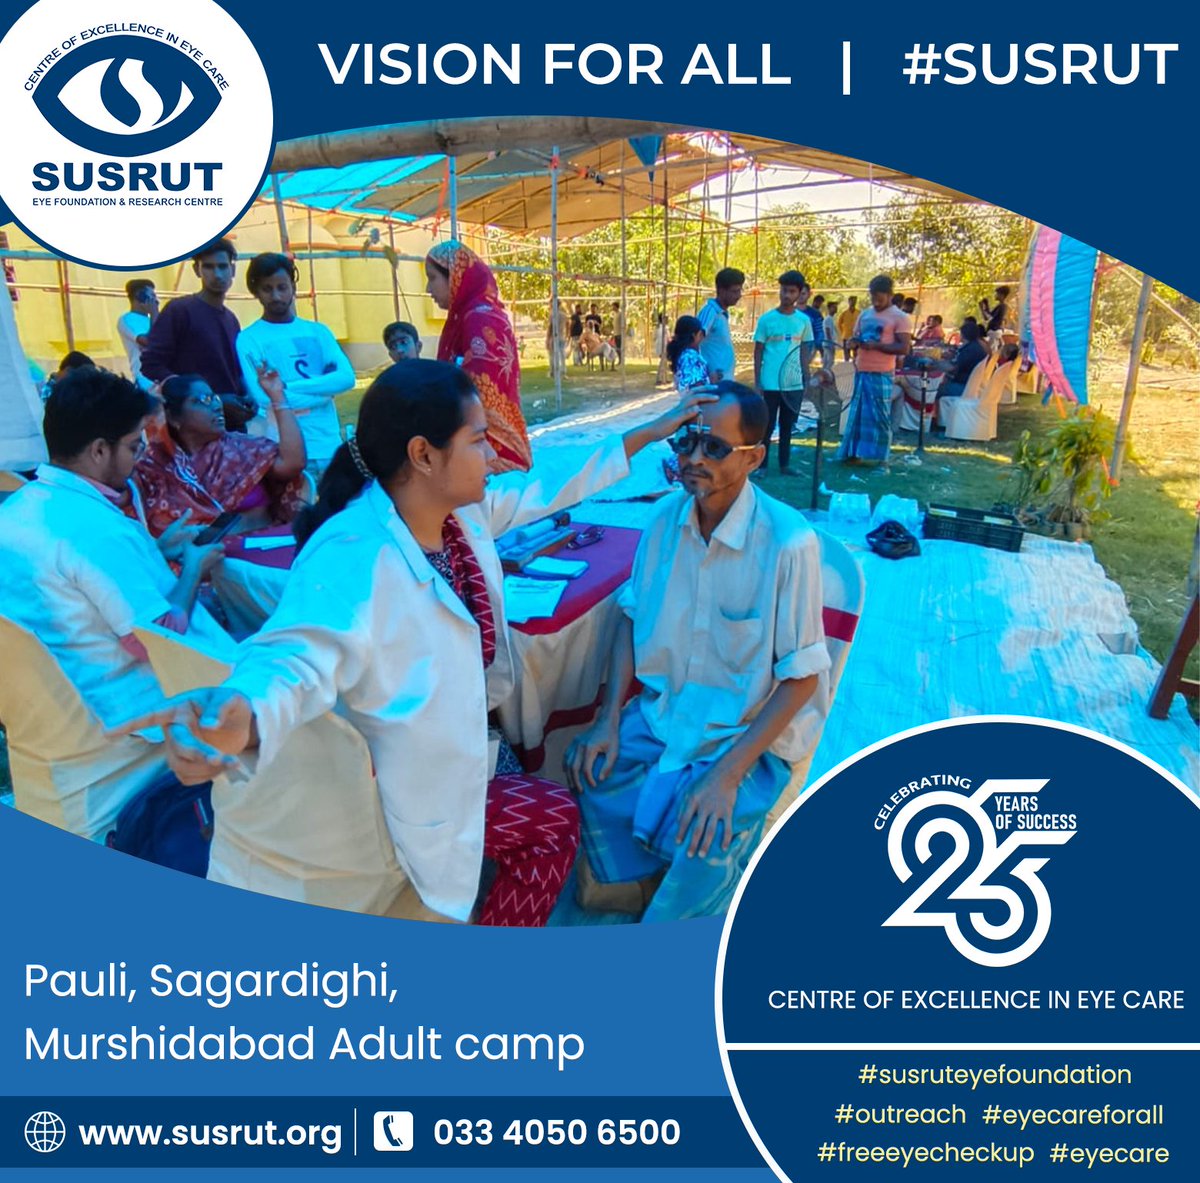 Pauli, Sagardighi, Murshidabad Adult Camp
susrut.org
.
.
.
#susrut #susruteyefoundation #eyecamp #visioncentre